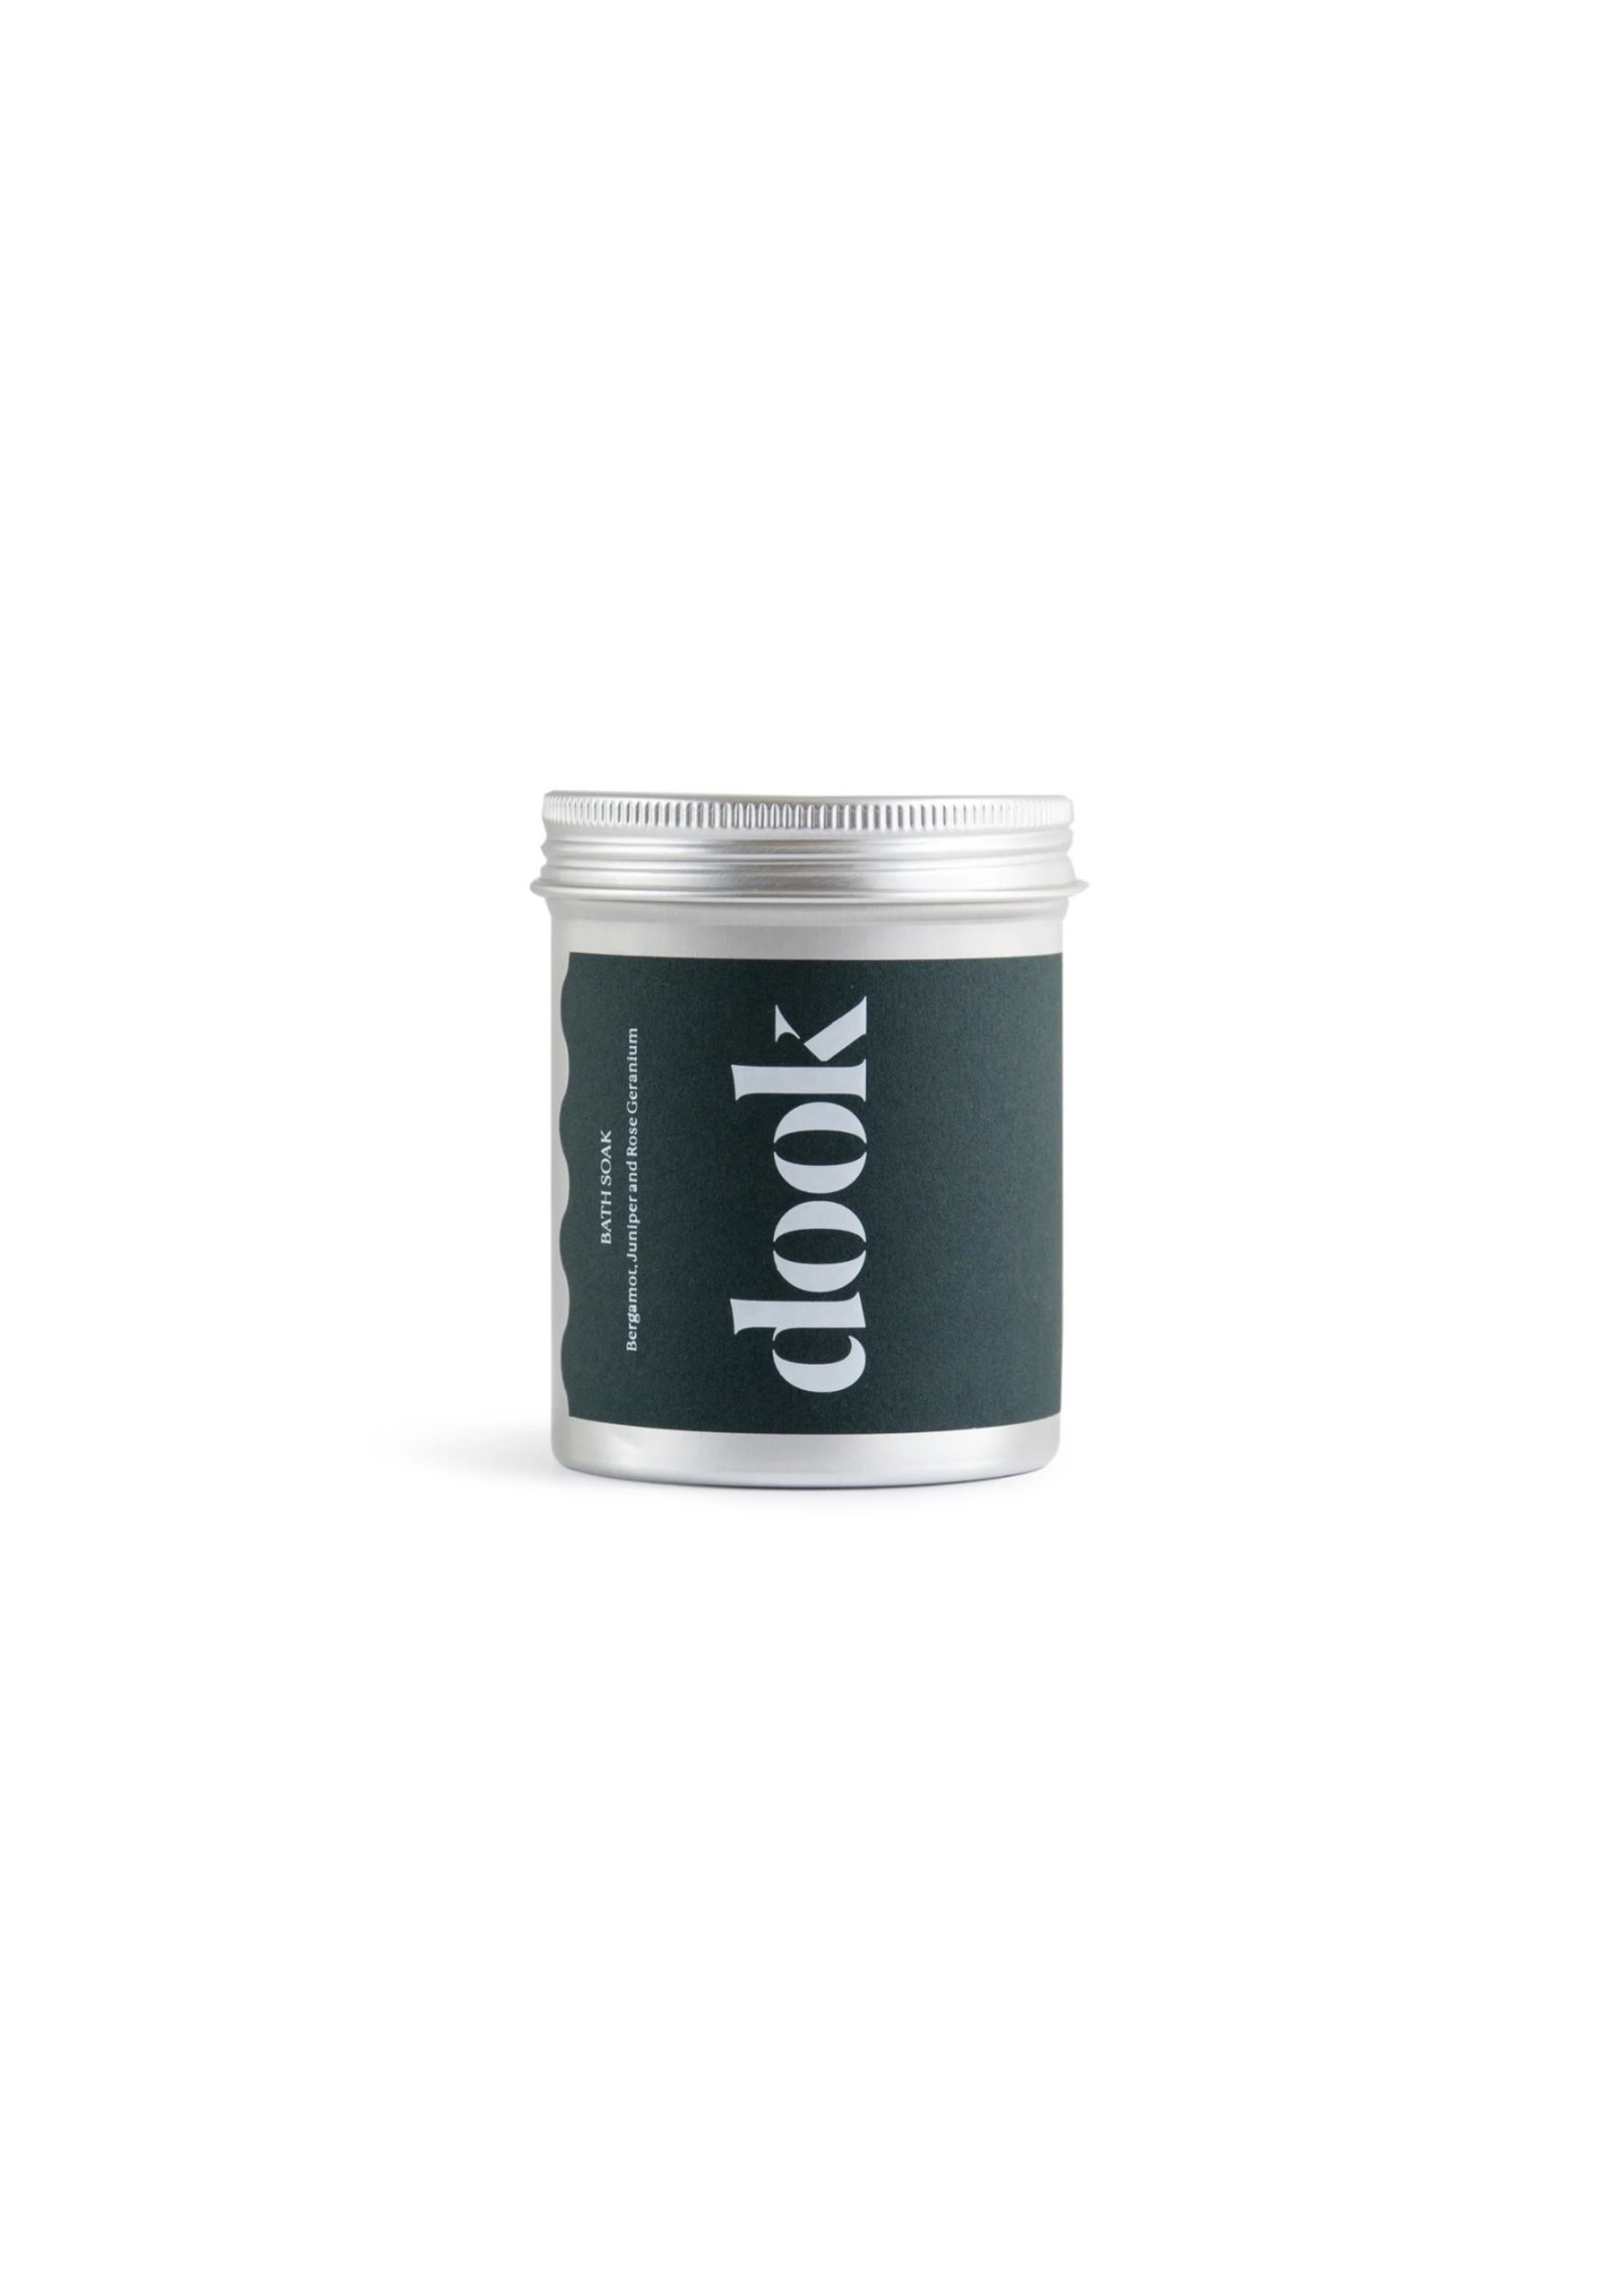 Dook Bath Soak - Bergamot, Juniper & Rose Geranium Salts Tin